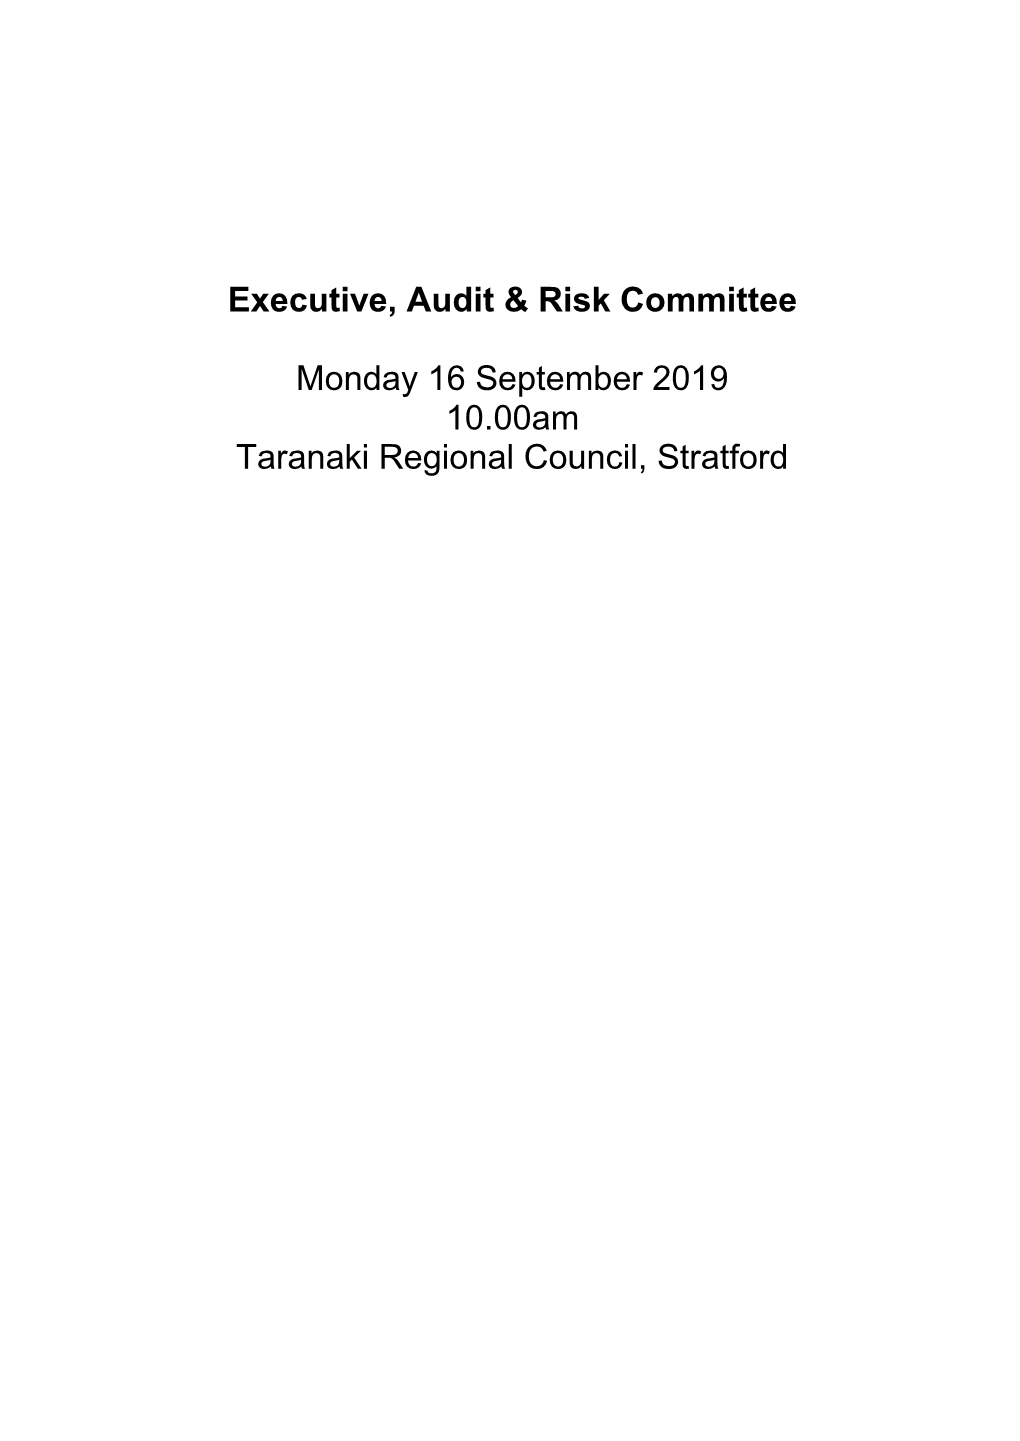 Executive, Audit & Risk Committee Agenda September 2019